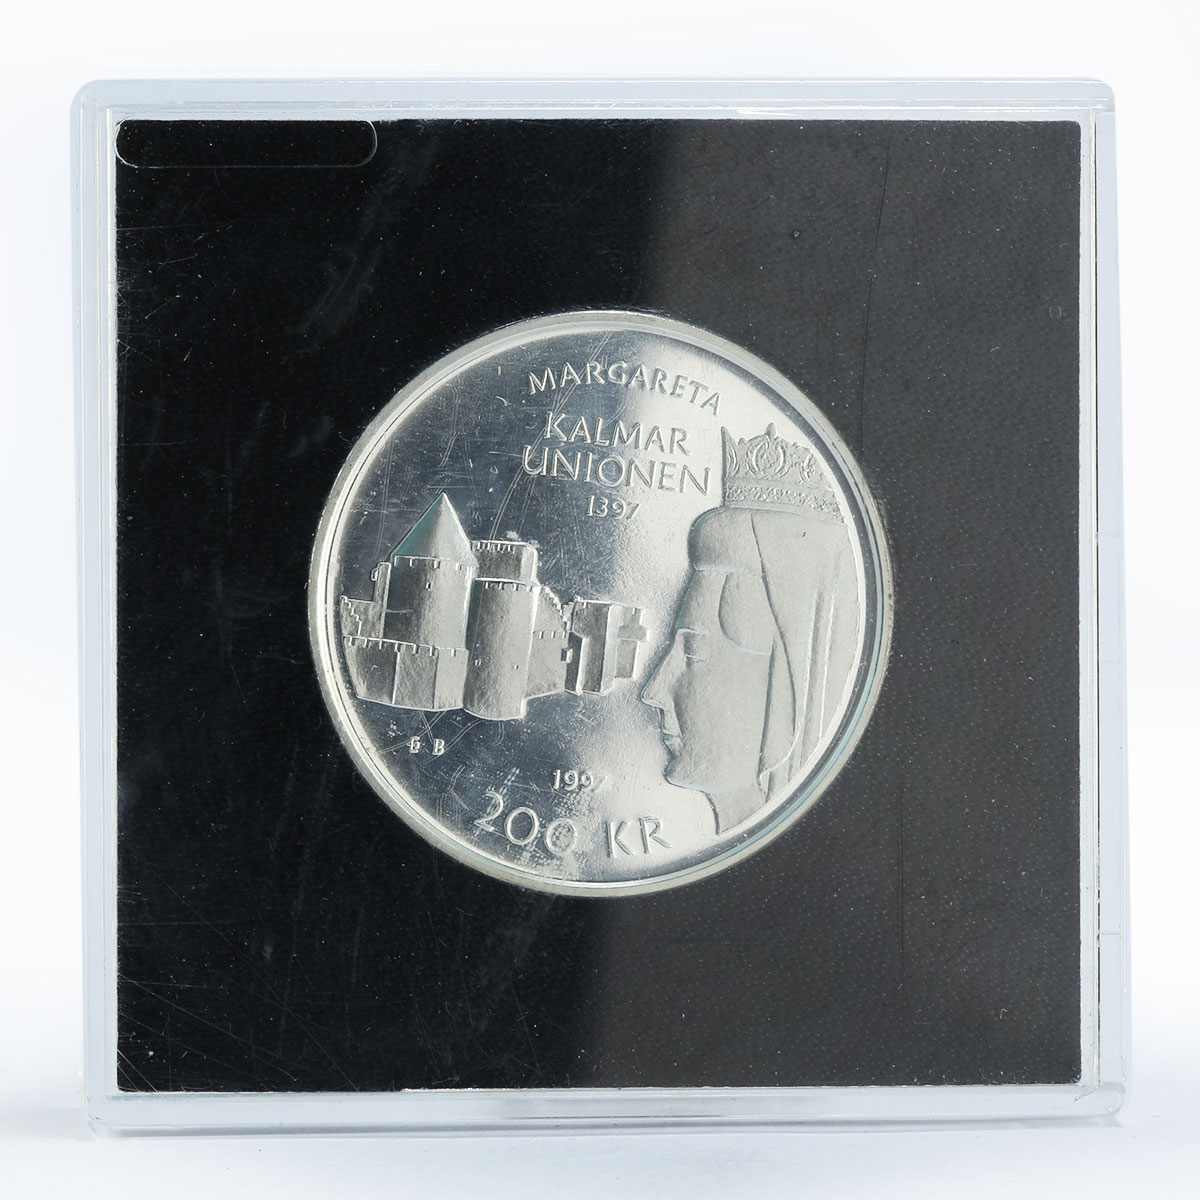 Sweden 200 kronor Historical series Kalmar Union proof silver coin 1997